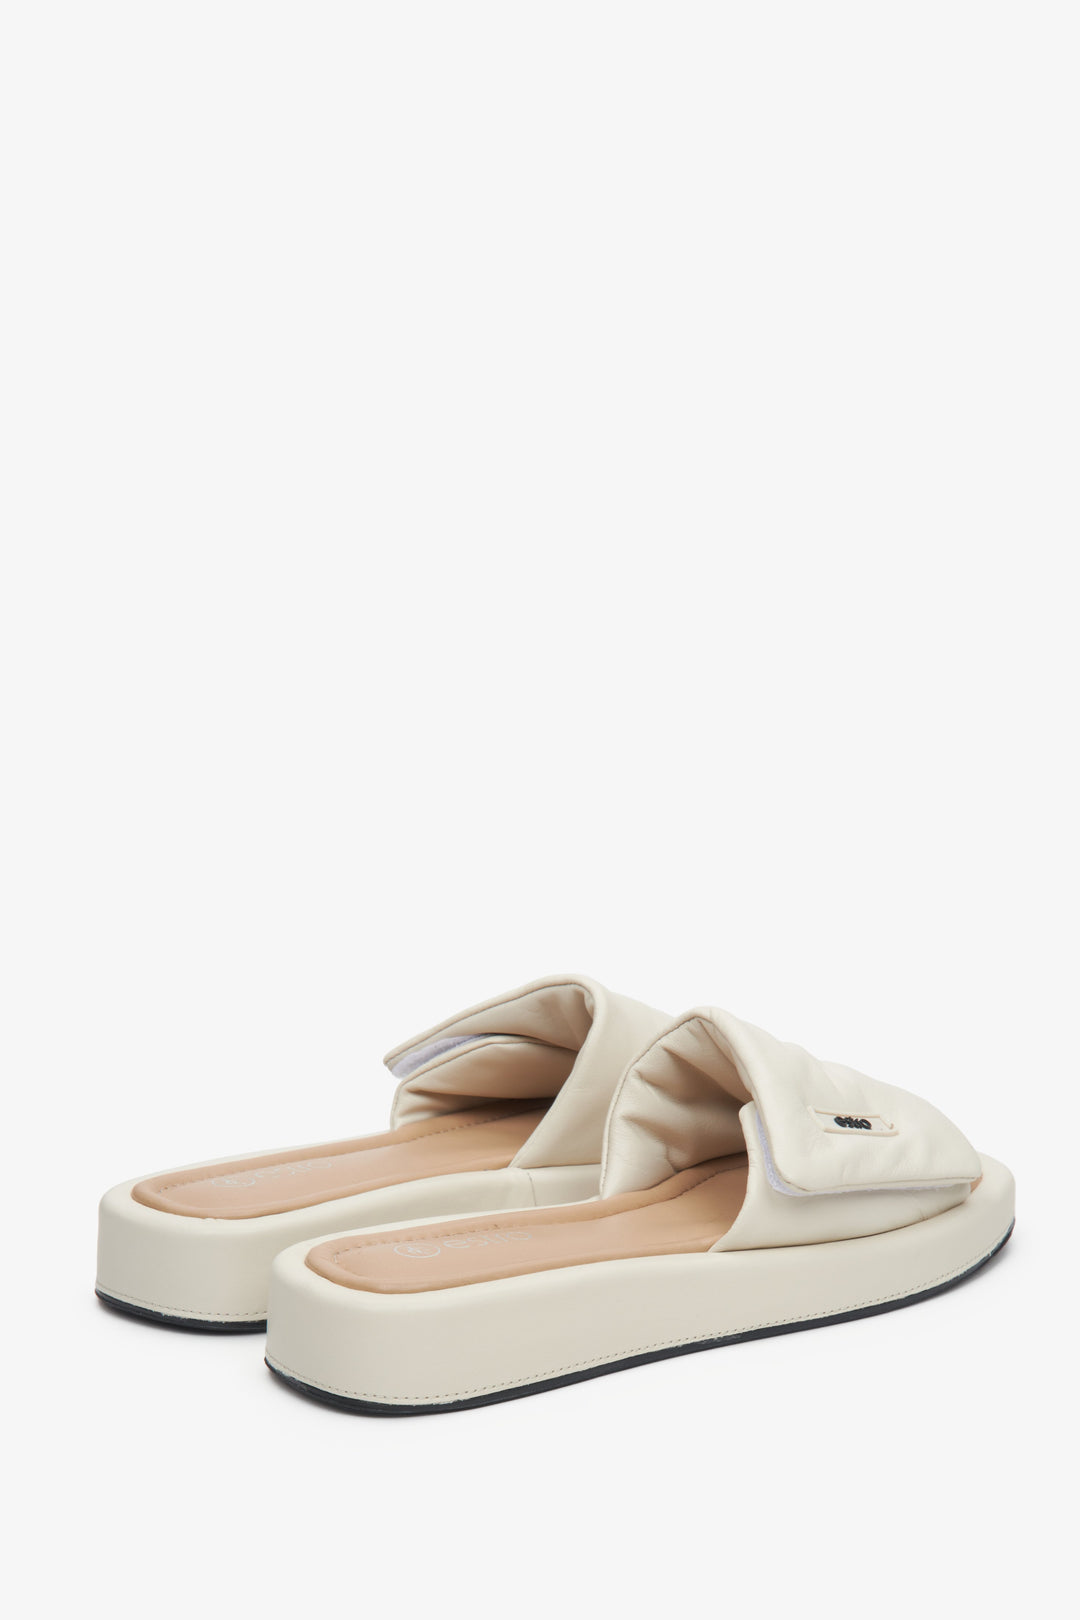 Leather slide sandals by Estro in light beige.